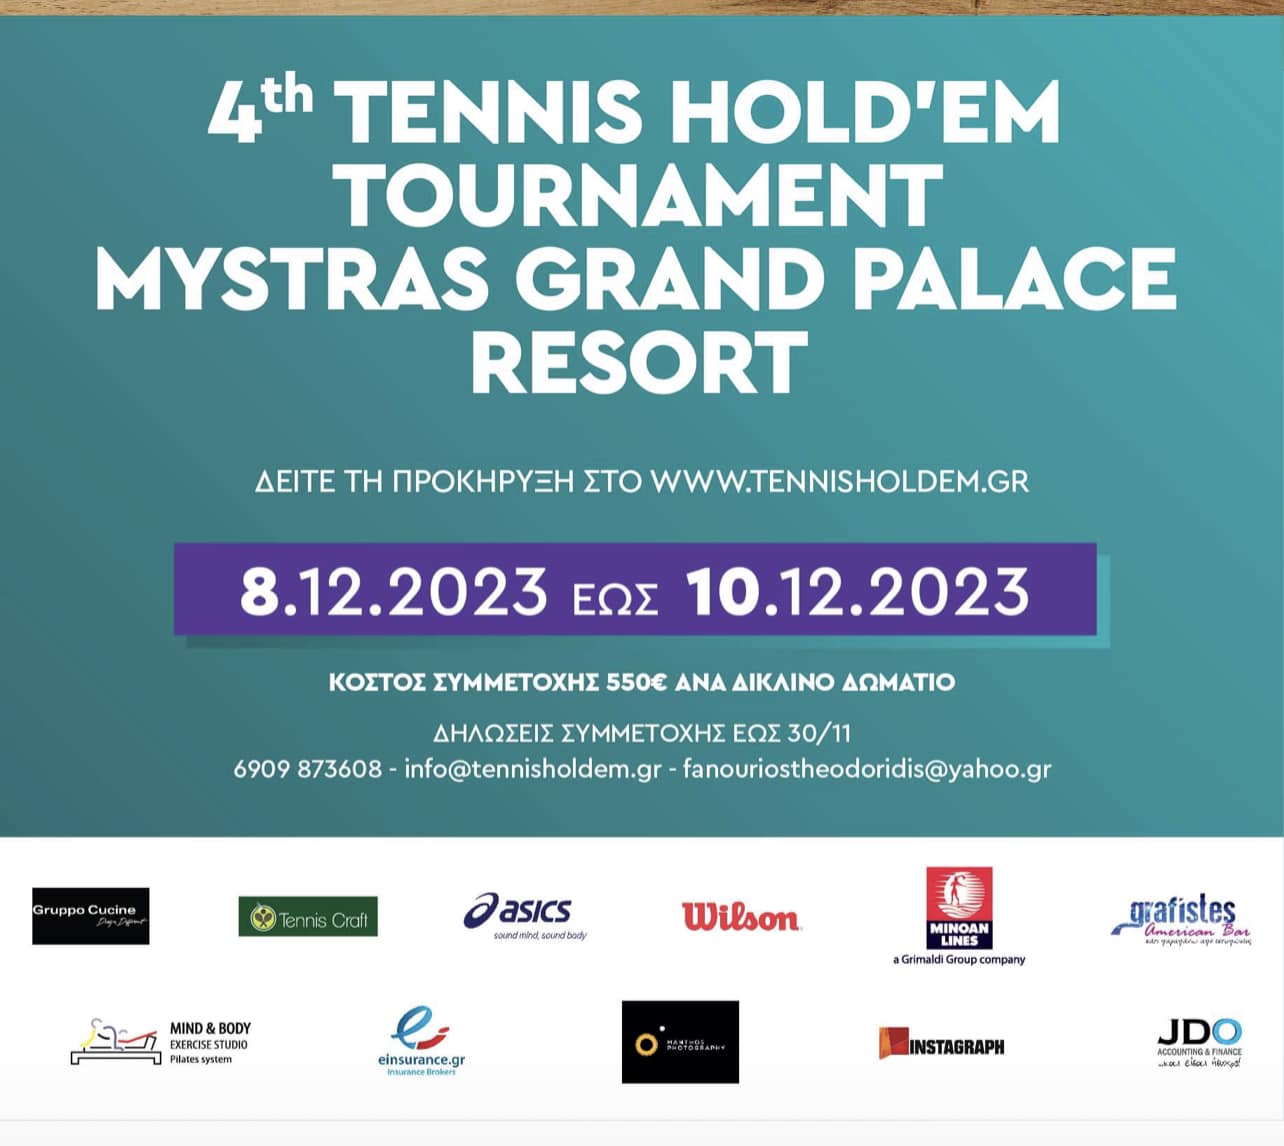 4th TENNIS HOLDEM TOURNAMENT - MYSTRAS - DECEMBER 2023